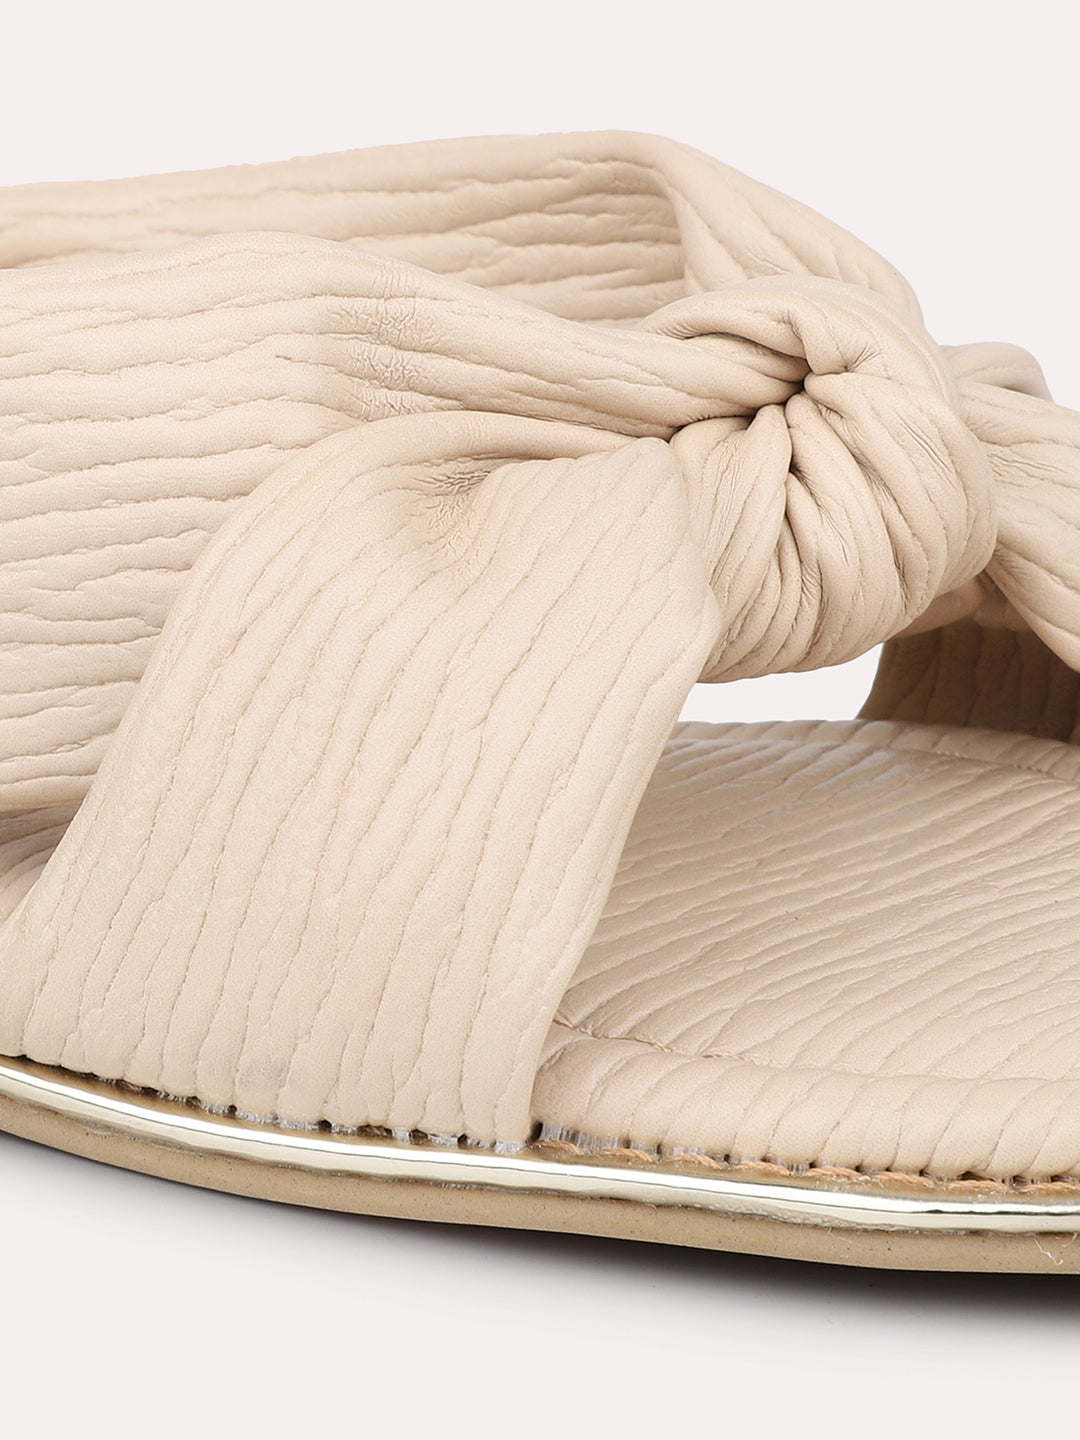 Women Beige Textured Wedge Sandals